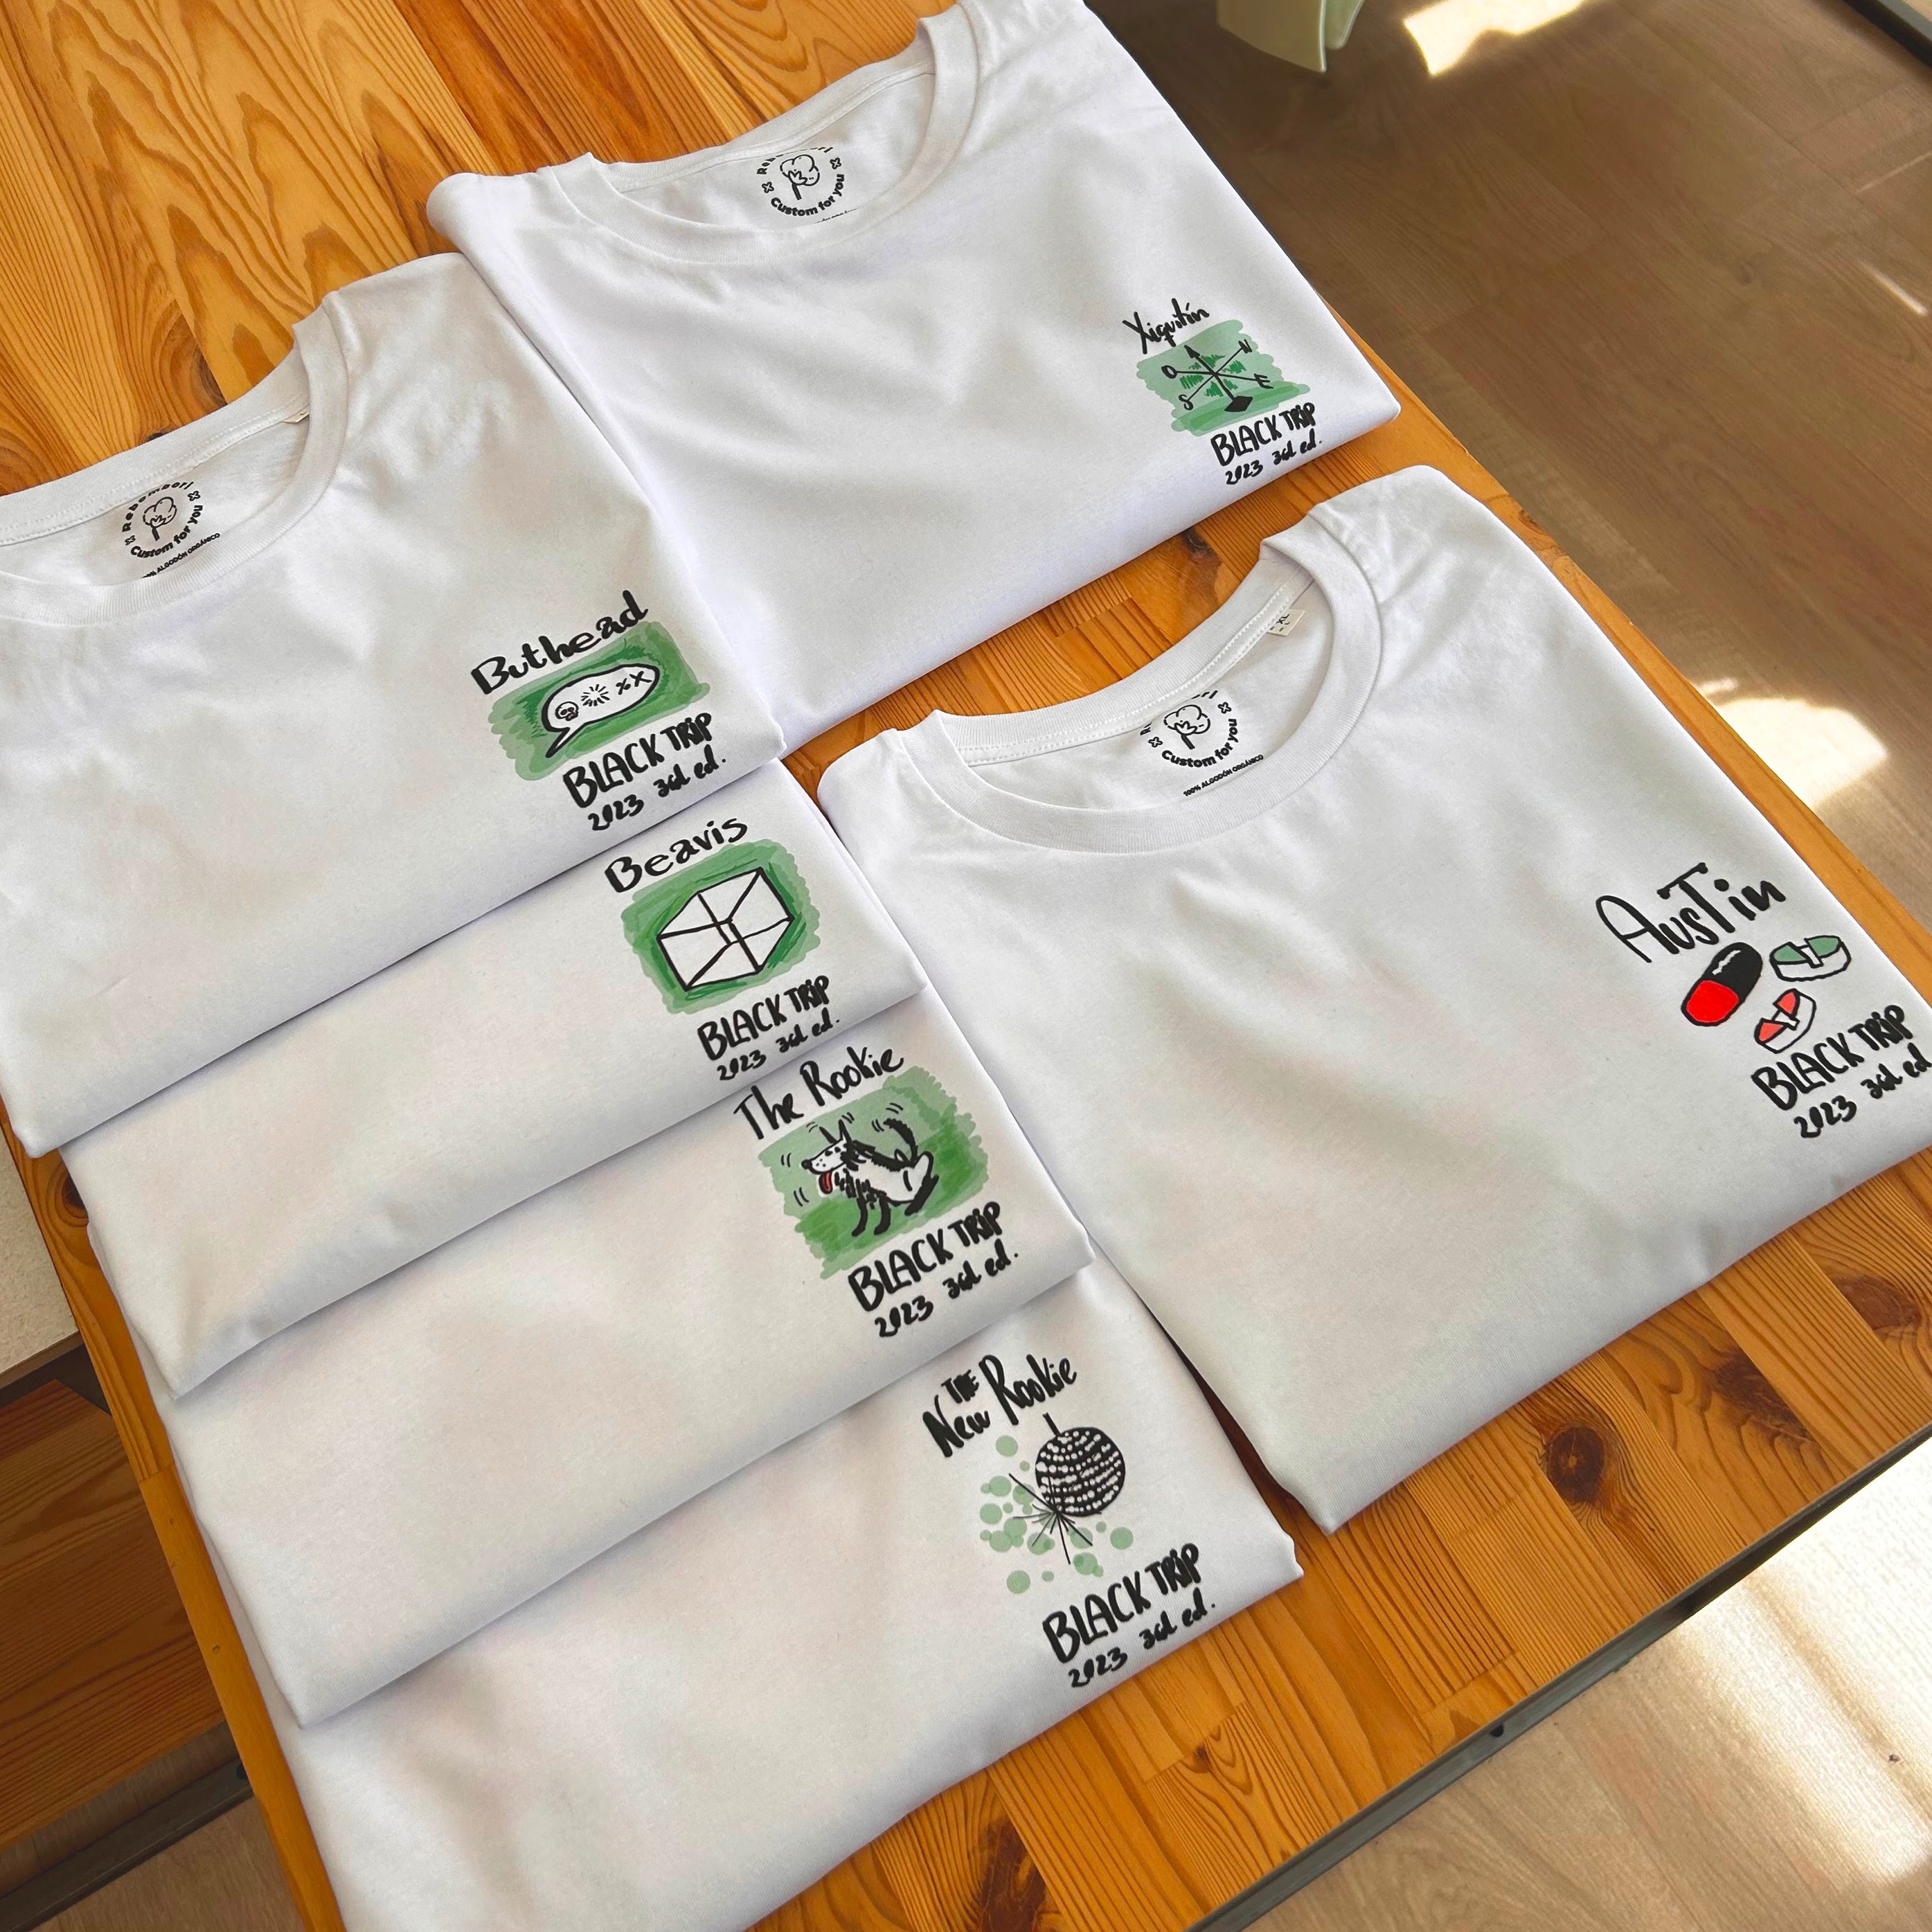 Camiseta unisex personalizada | 100% algodón orgánico